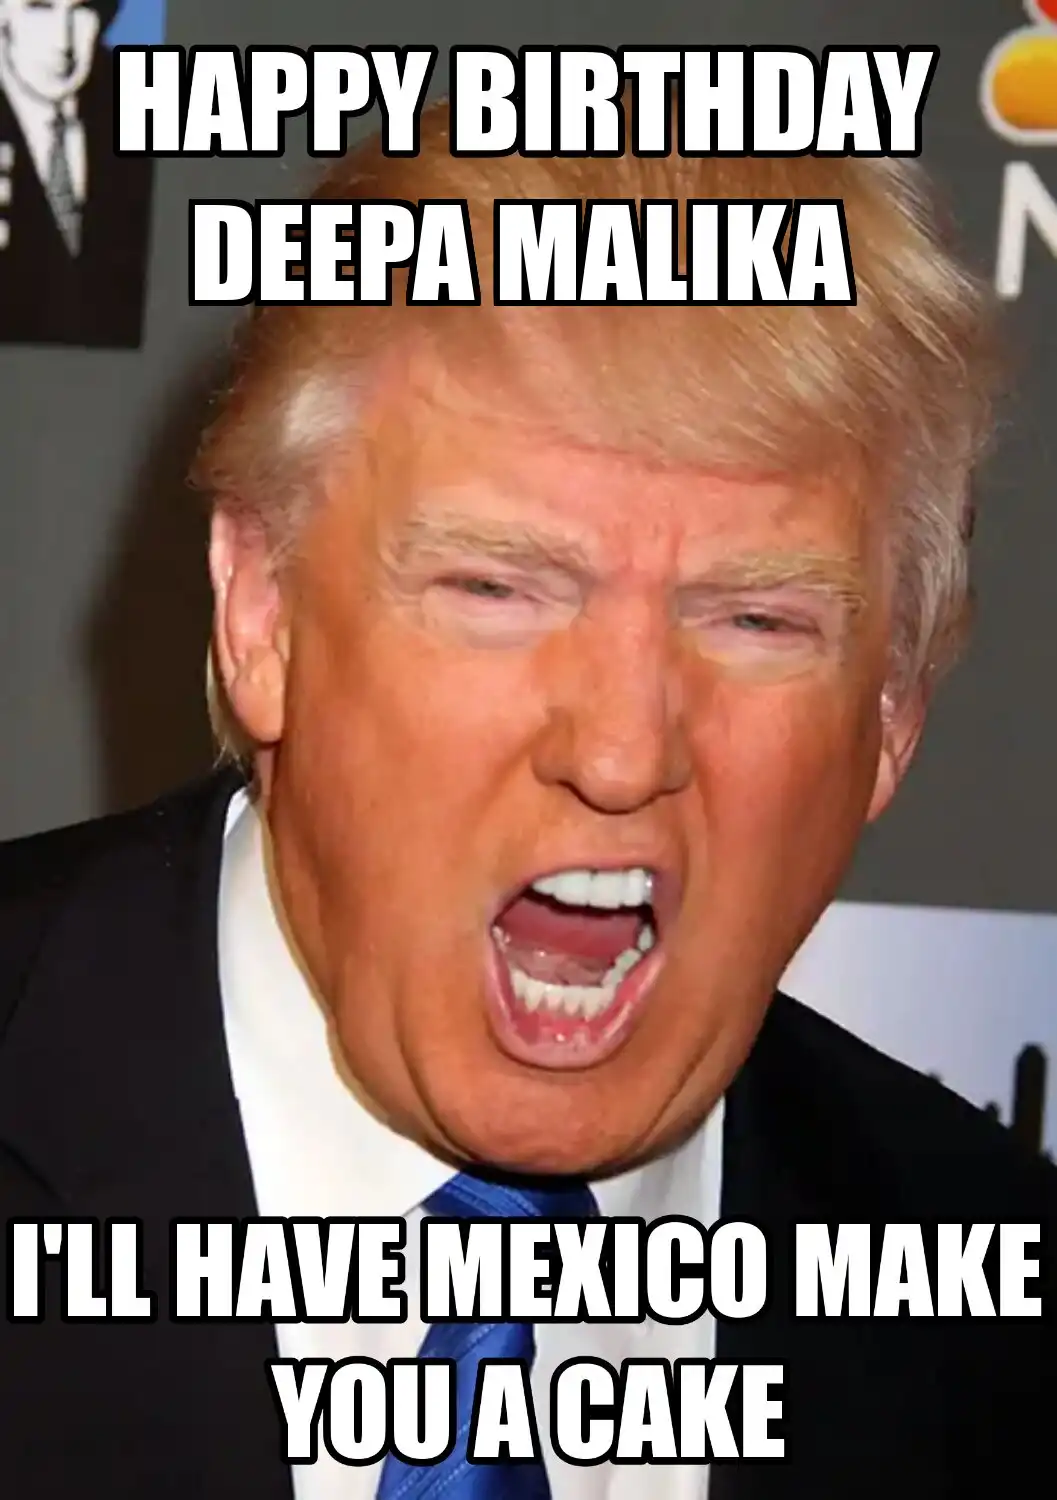 Happy Birthday Deepa malika Mexico Make You A Cake Meme